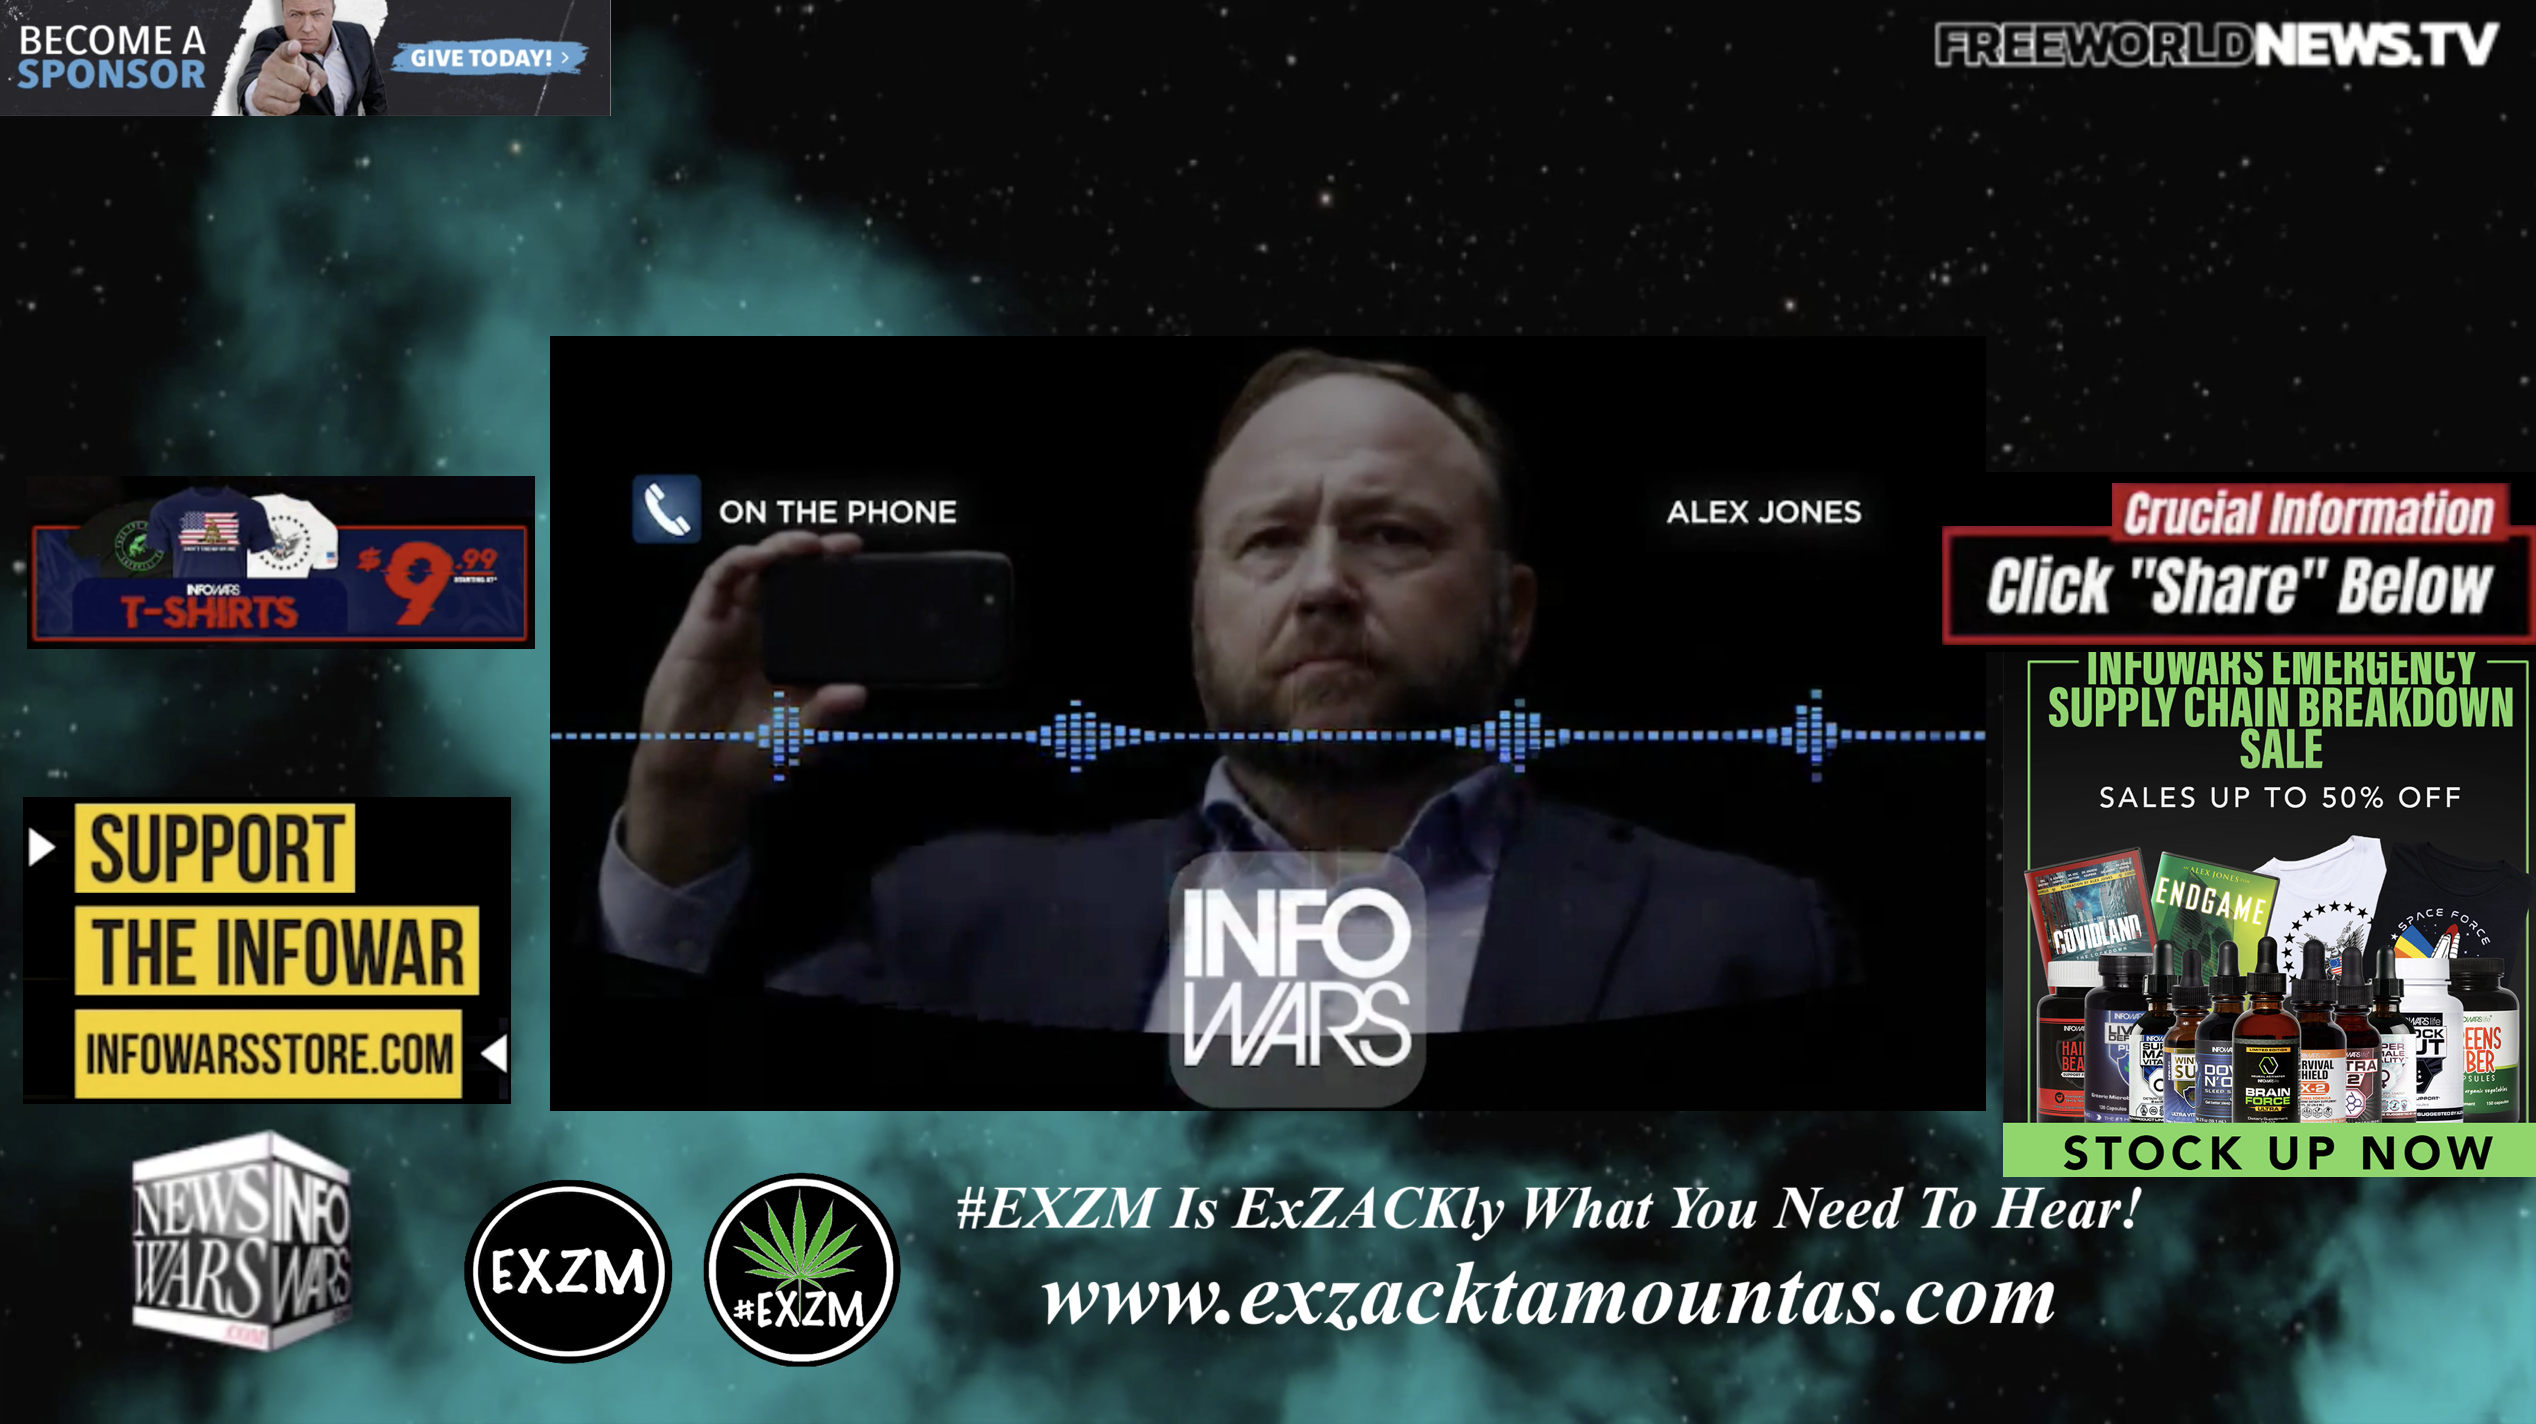 Alex Jones Live In Infowars Studio Free World News TV EXZM Zack Mount October 14th 2021 copy